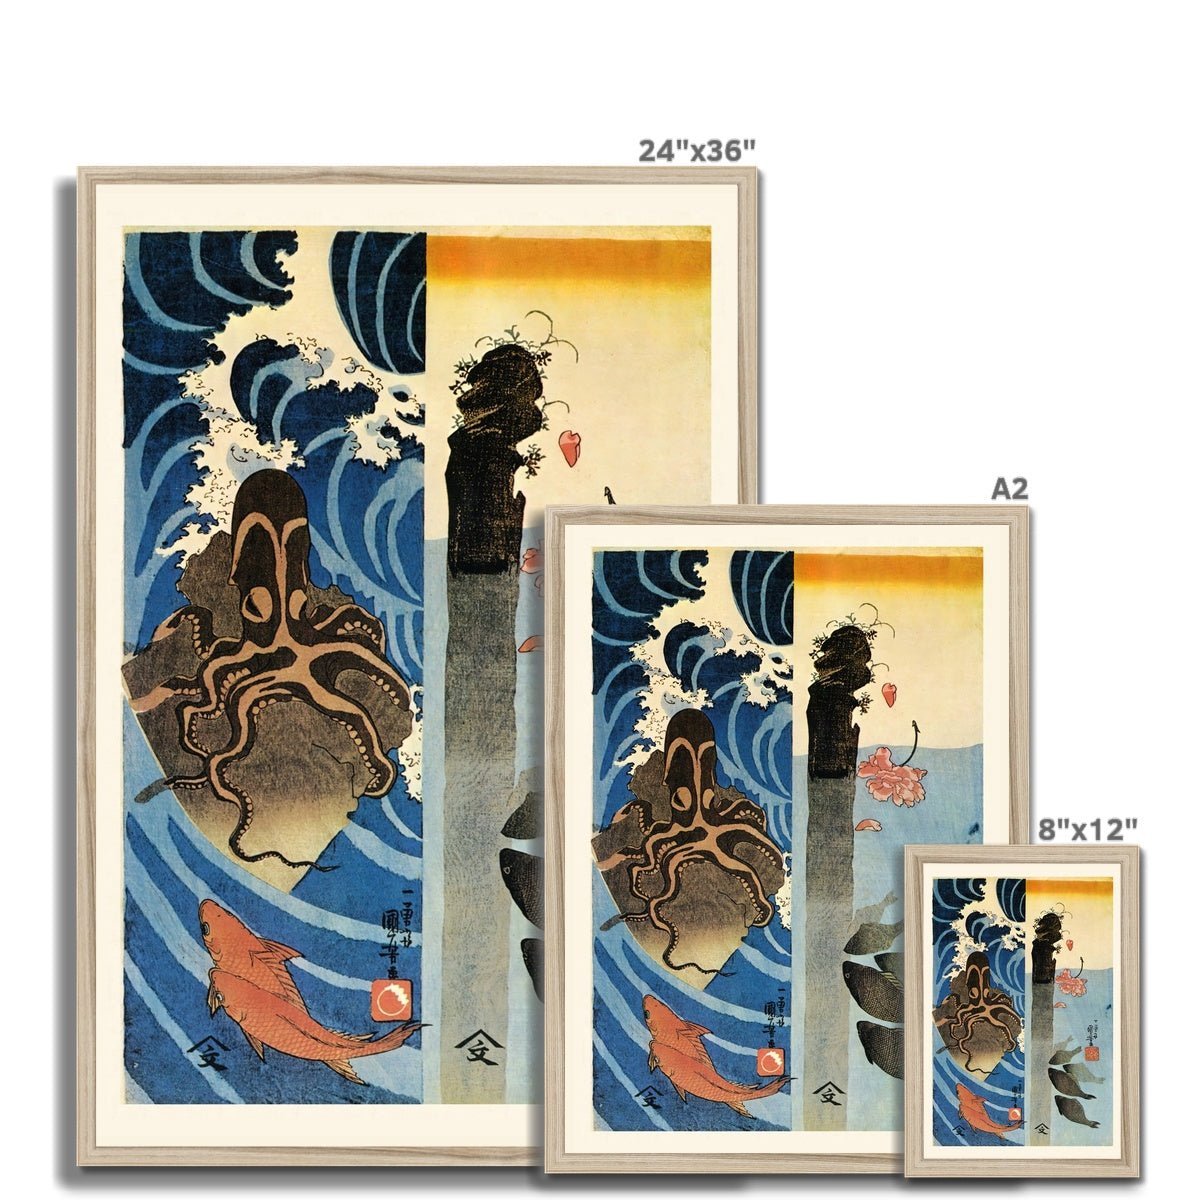 Marine Fish prints - fish drawings Illustrations Series 100 Framed, or  Prints